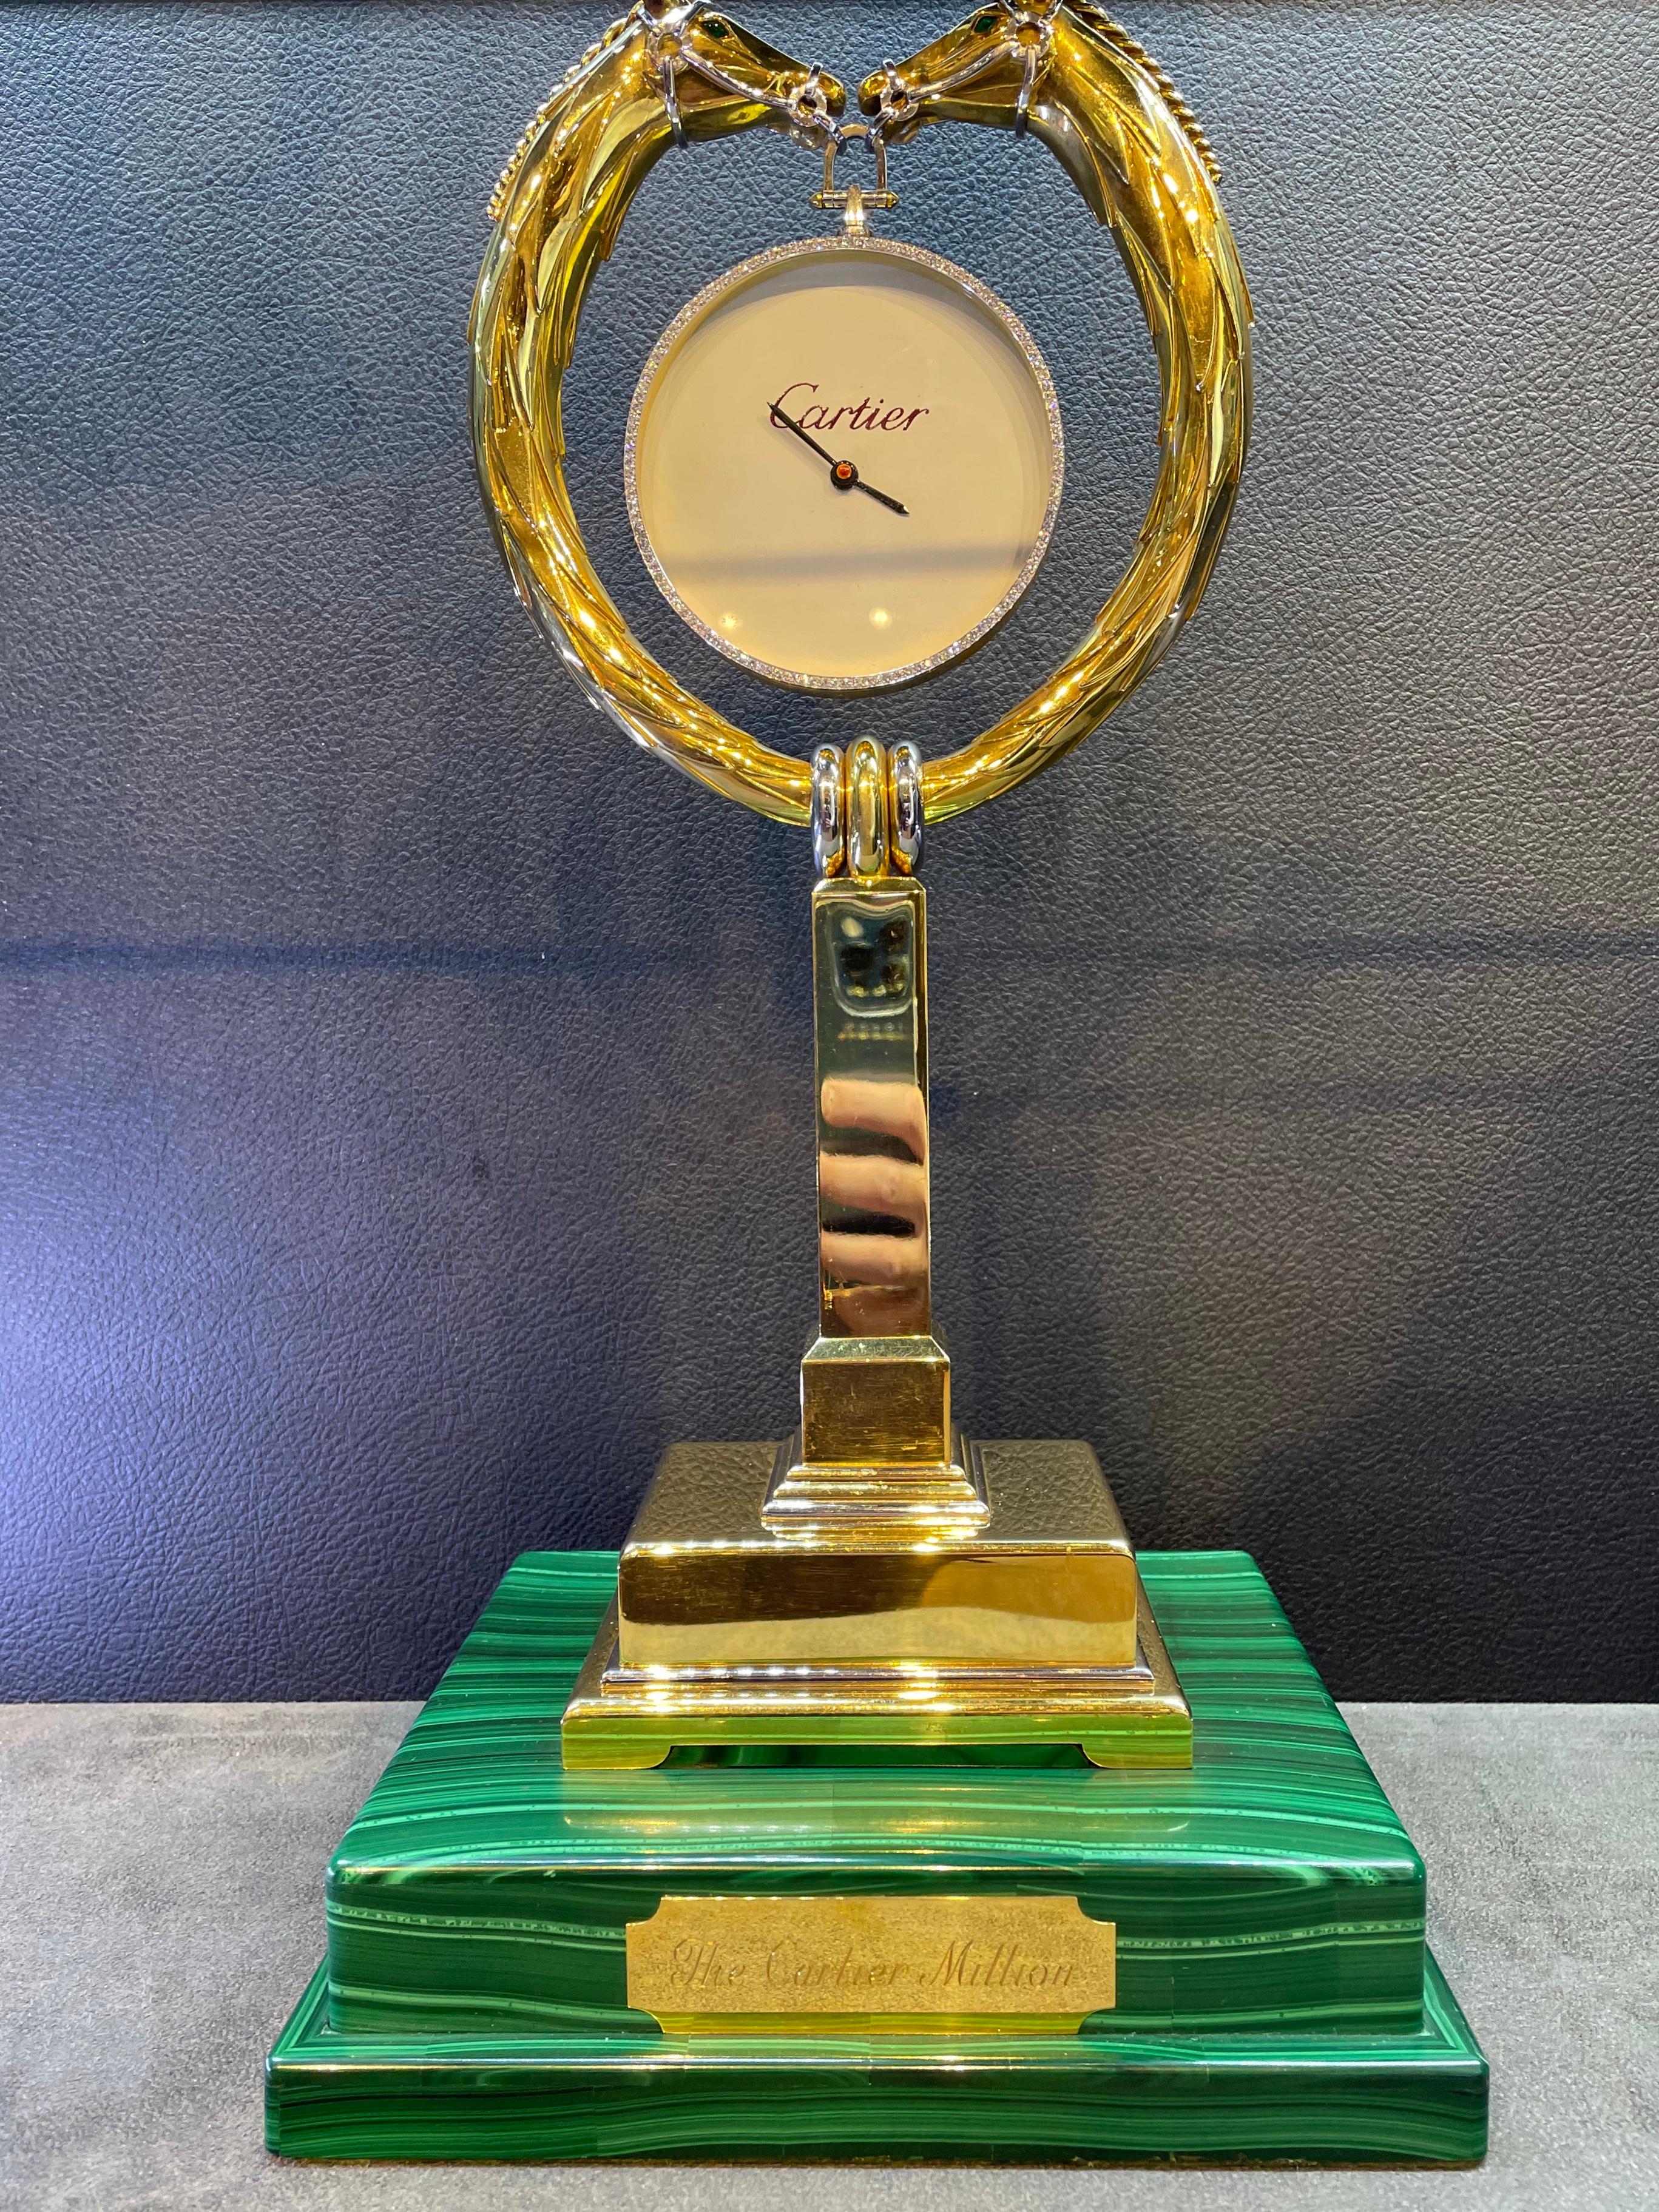 Monumental Cartier Gold Horse Trophy Clock, 